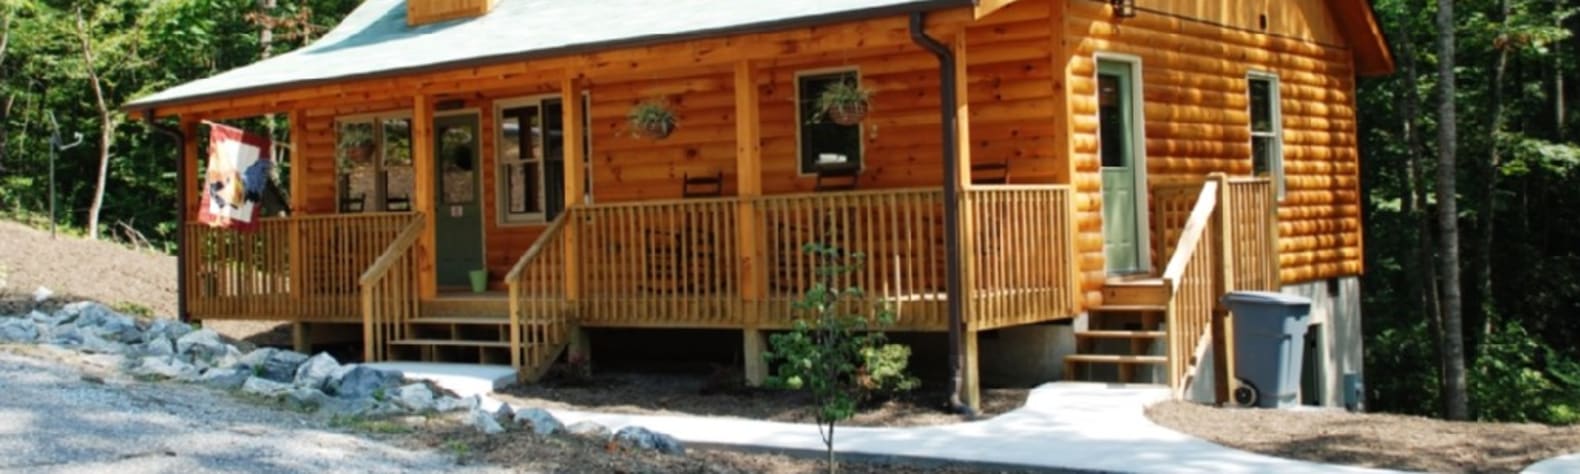 Rooster Ridge Cabin